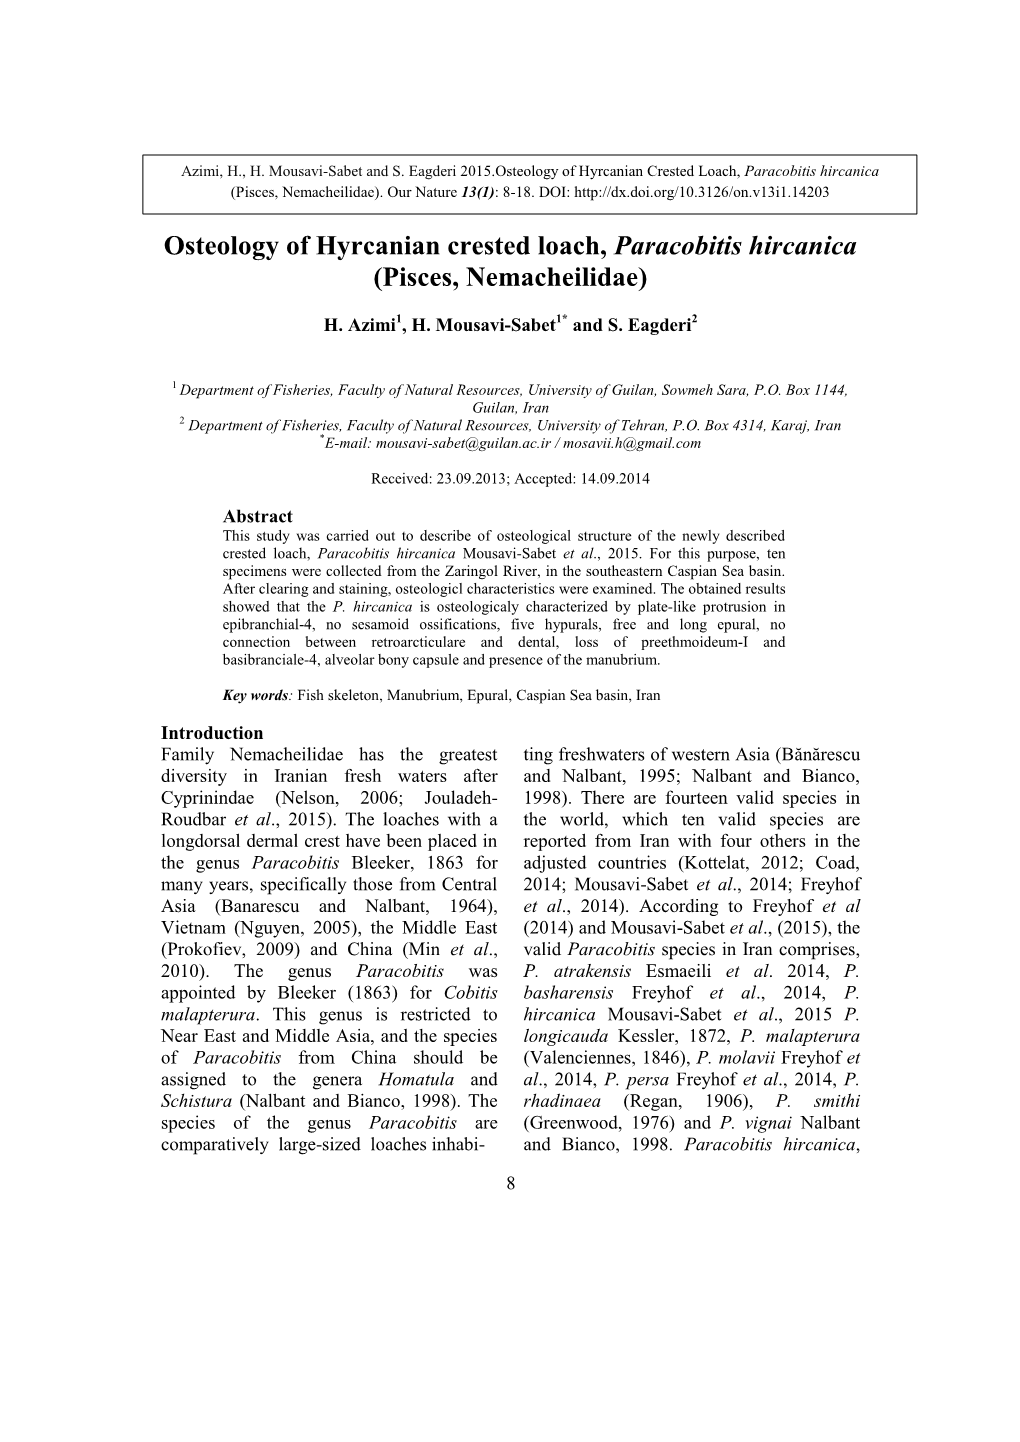 Osteology of Hyrcanian Crested Loach, Paracobitis Hircanica (Pisces, Nemacheilidae)